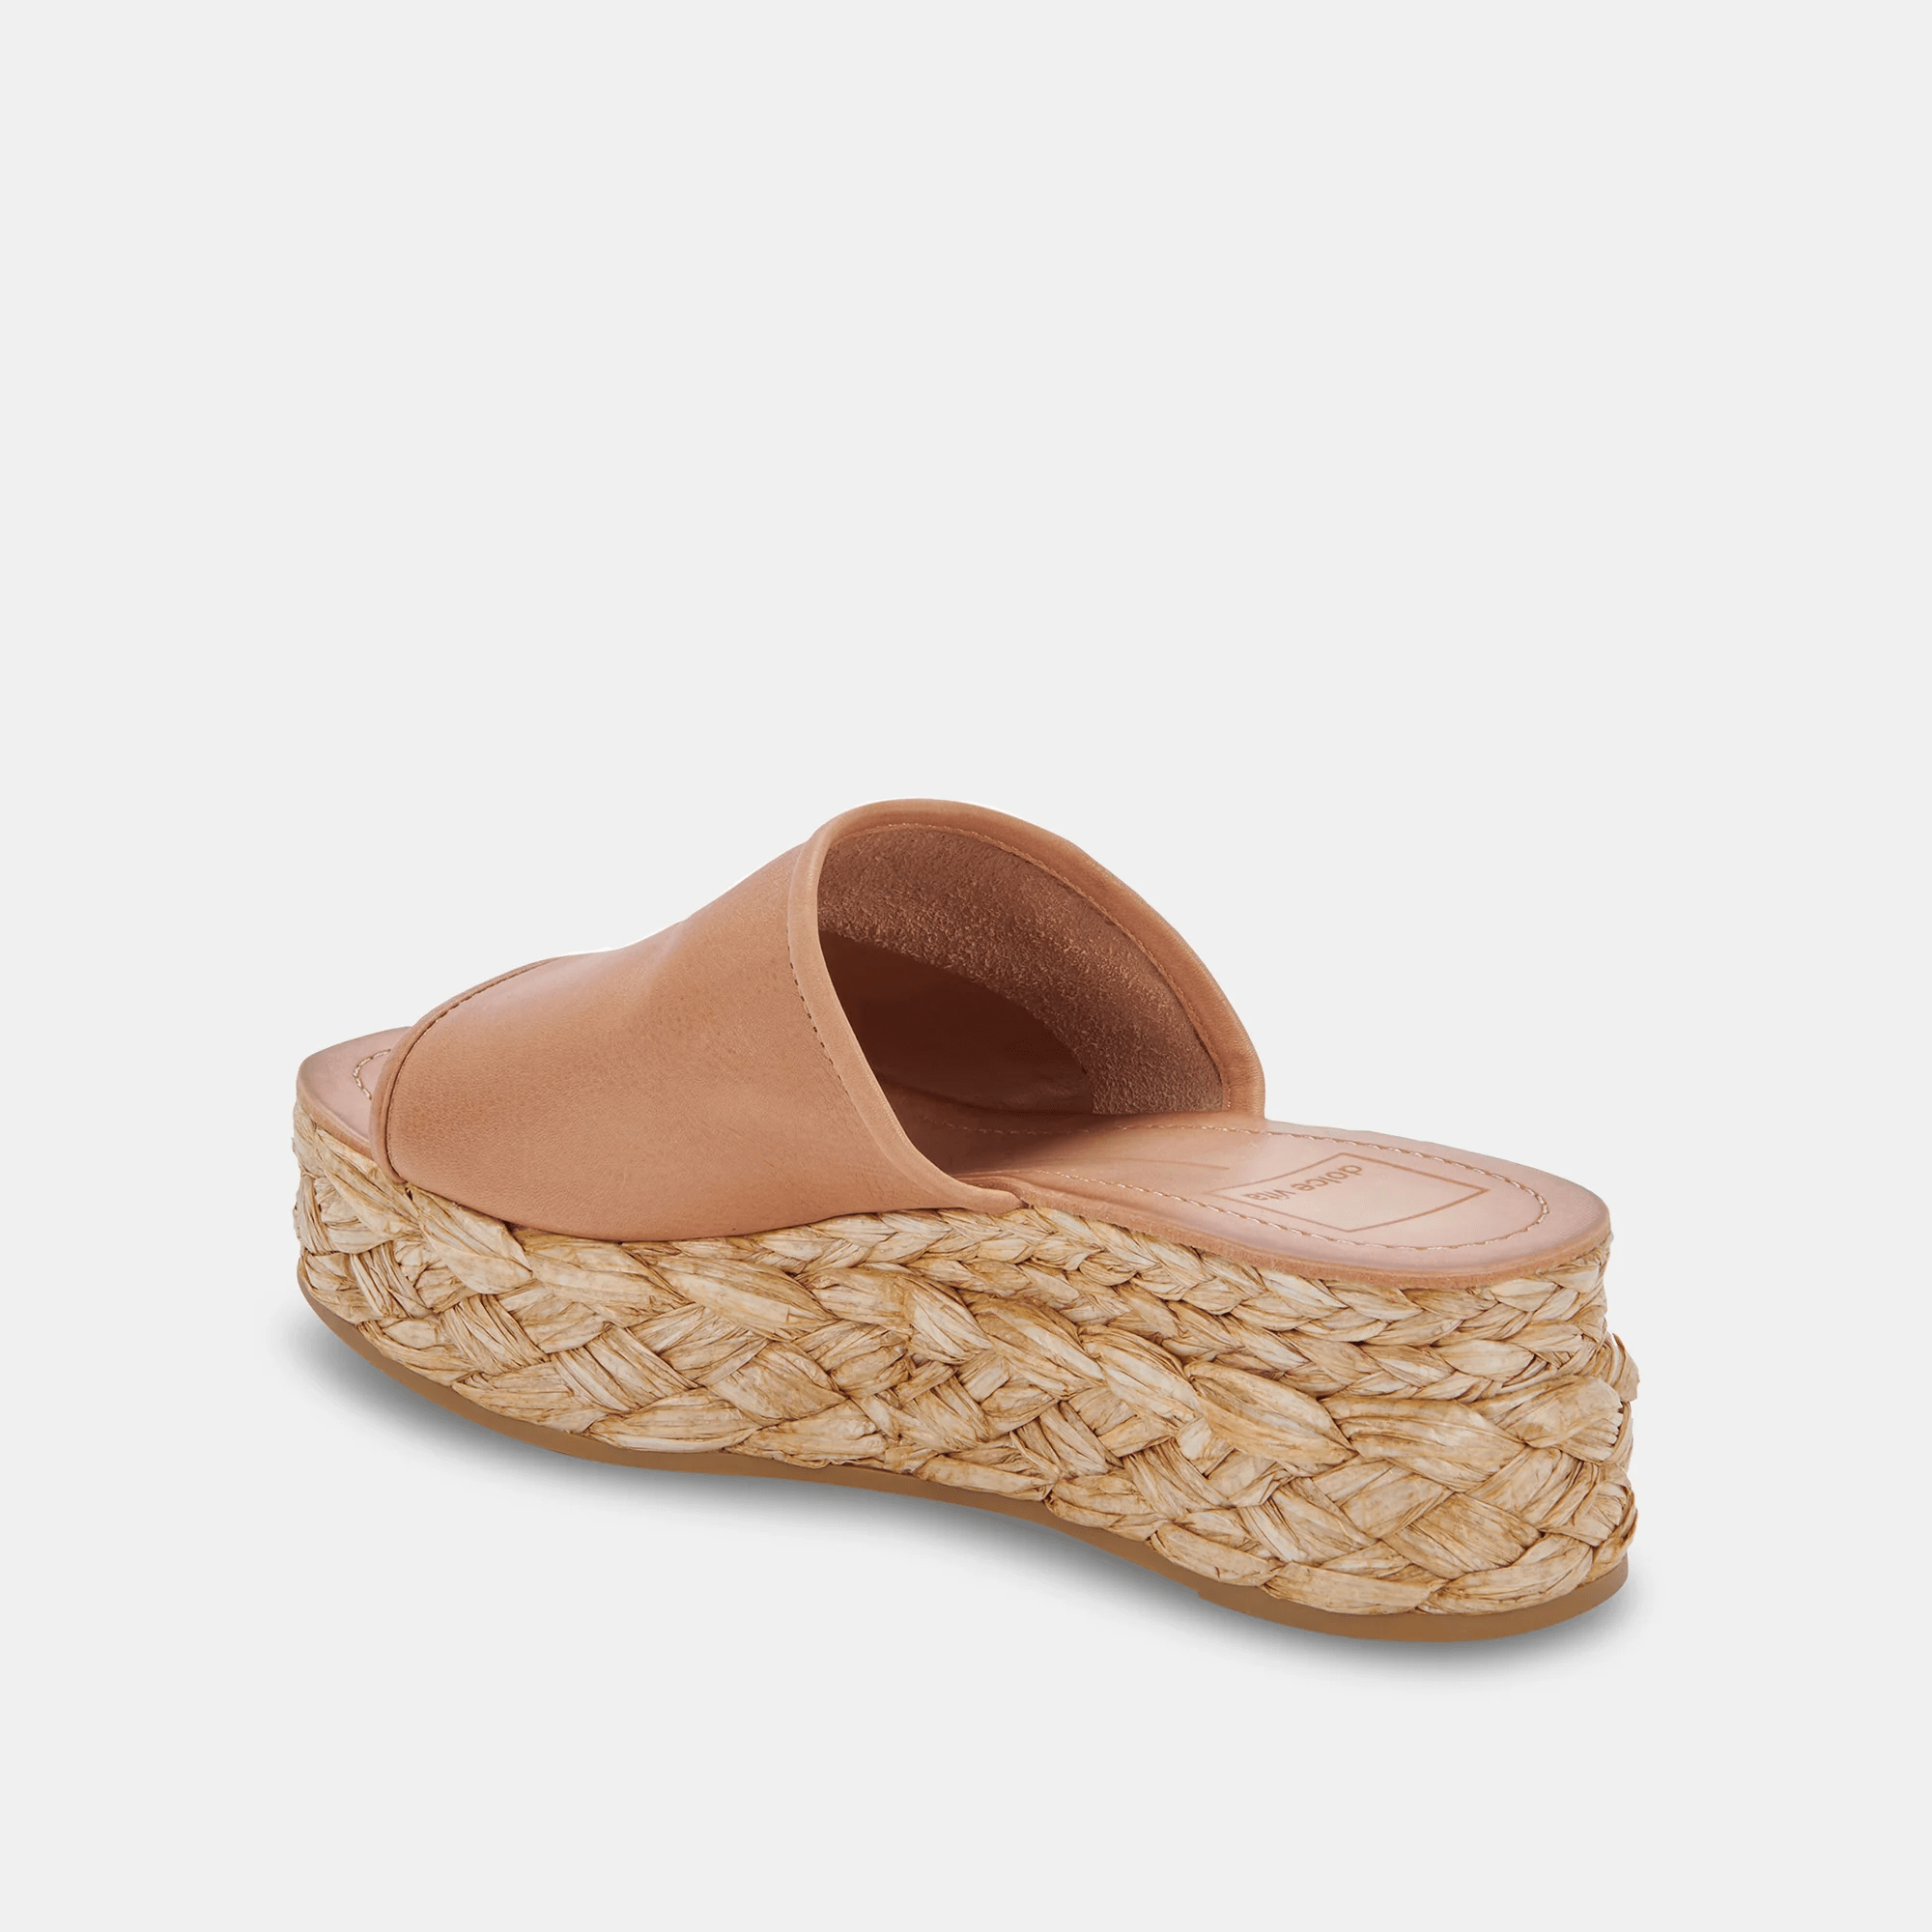 Fashion-Sandals-Shoes-Ruby Jane.